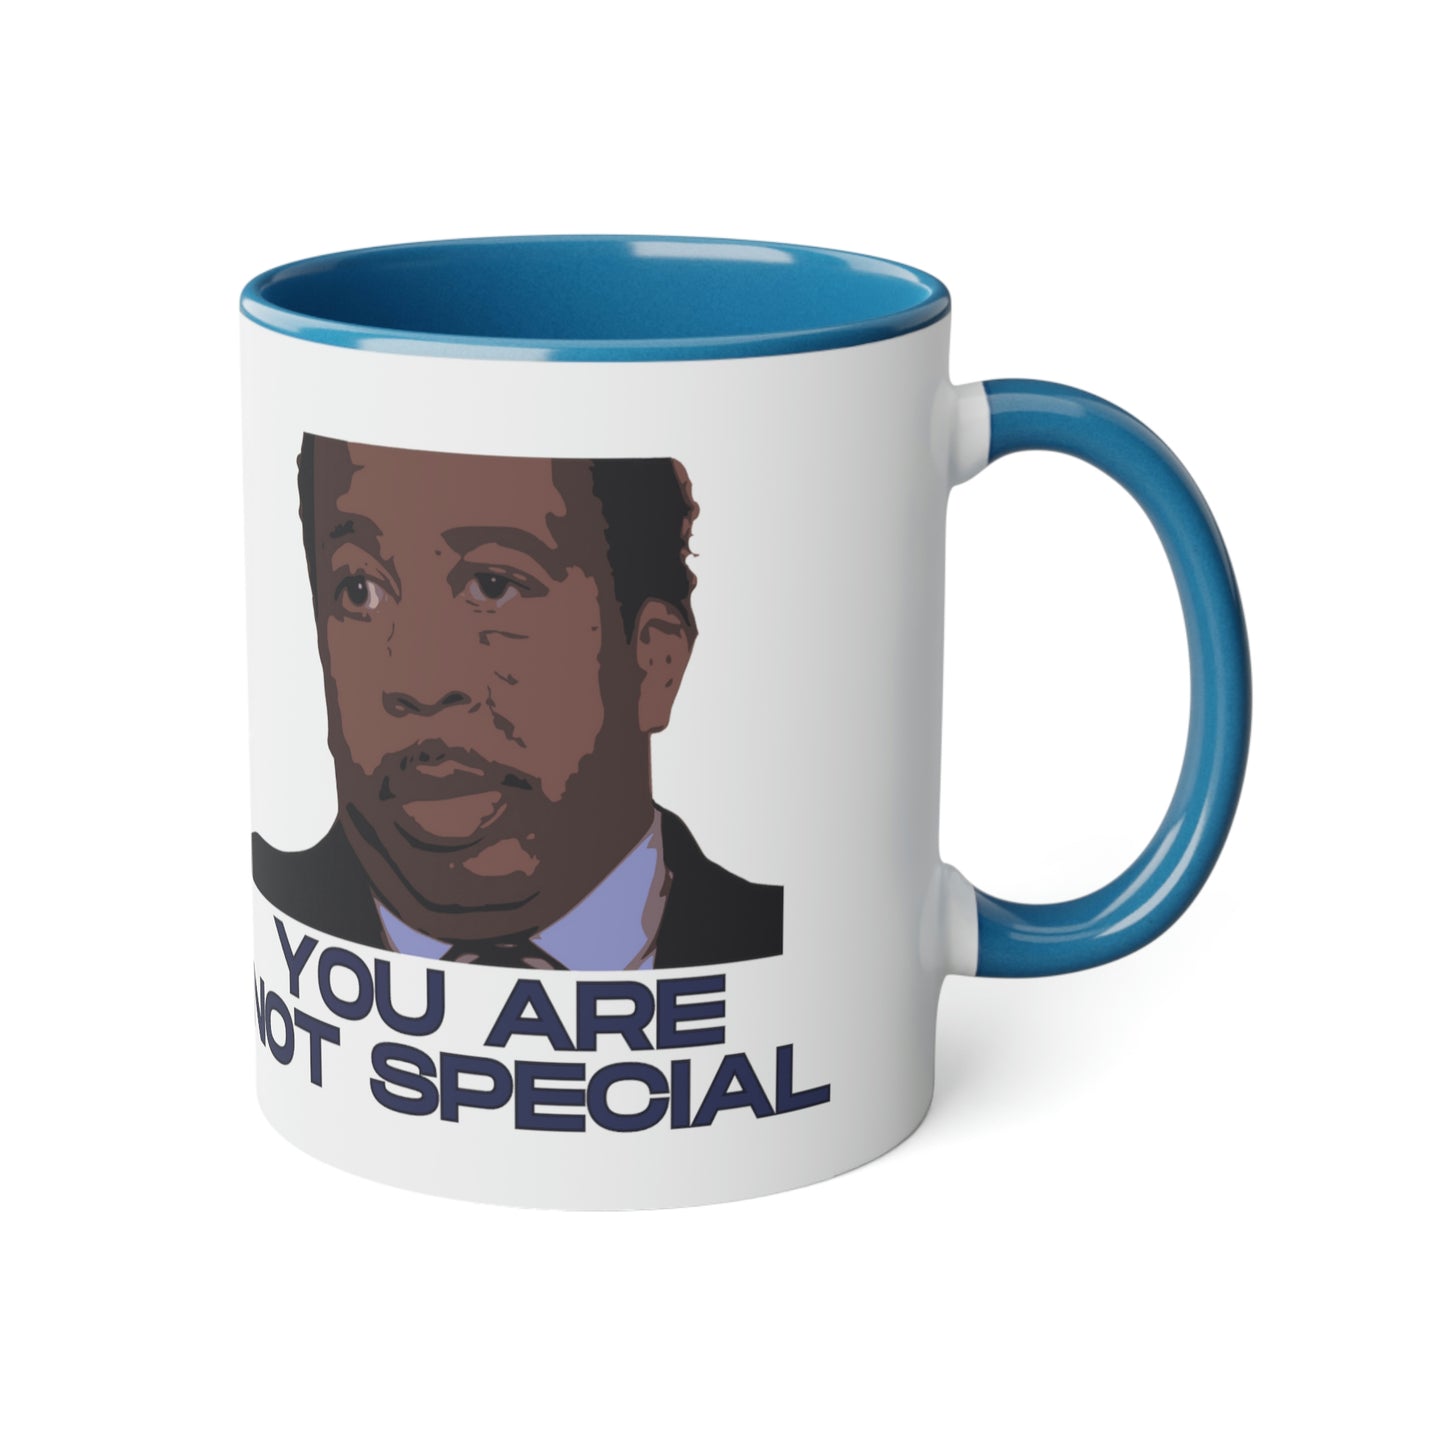 Meme Mug Dunder Mifflin workplace comedy - News flash: You are not special